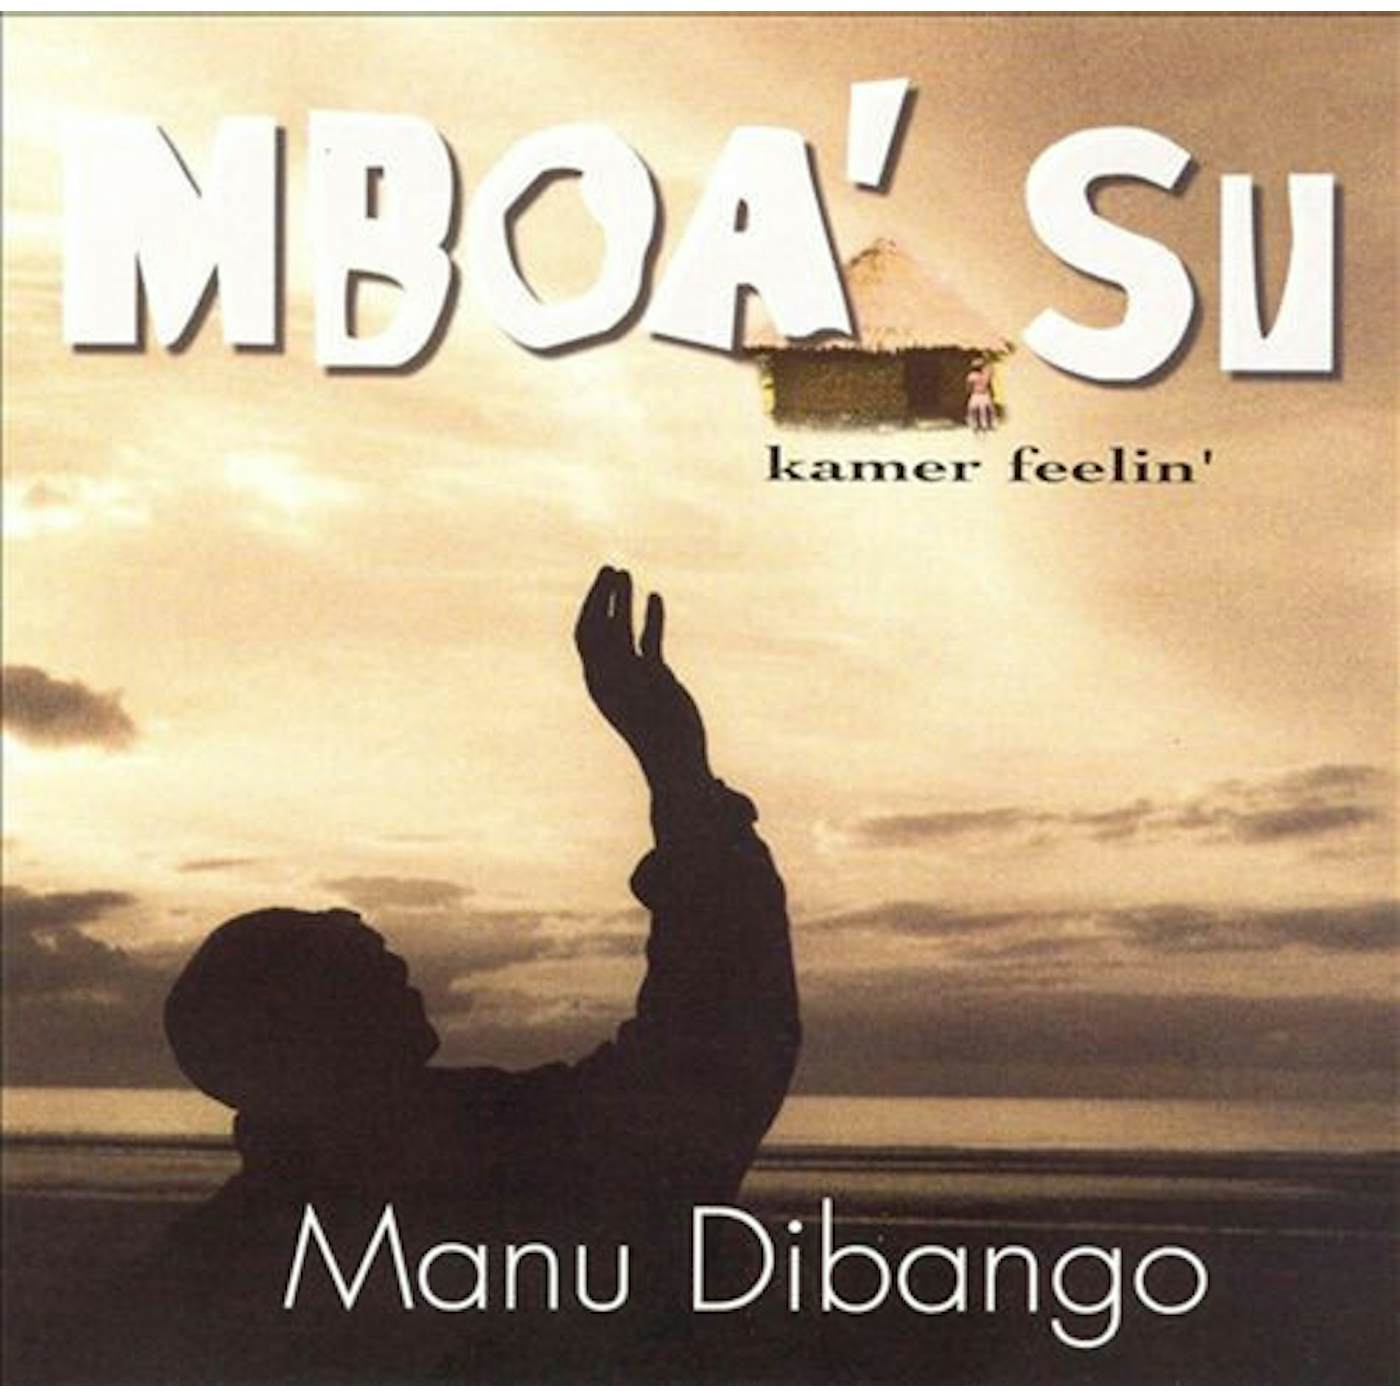 Manu Dibango MBOA' SU (KAMER FEELIN') CD